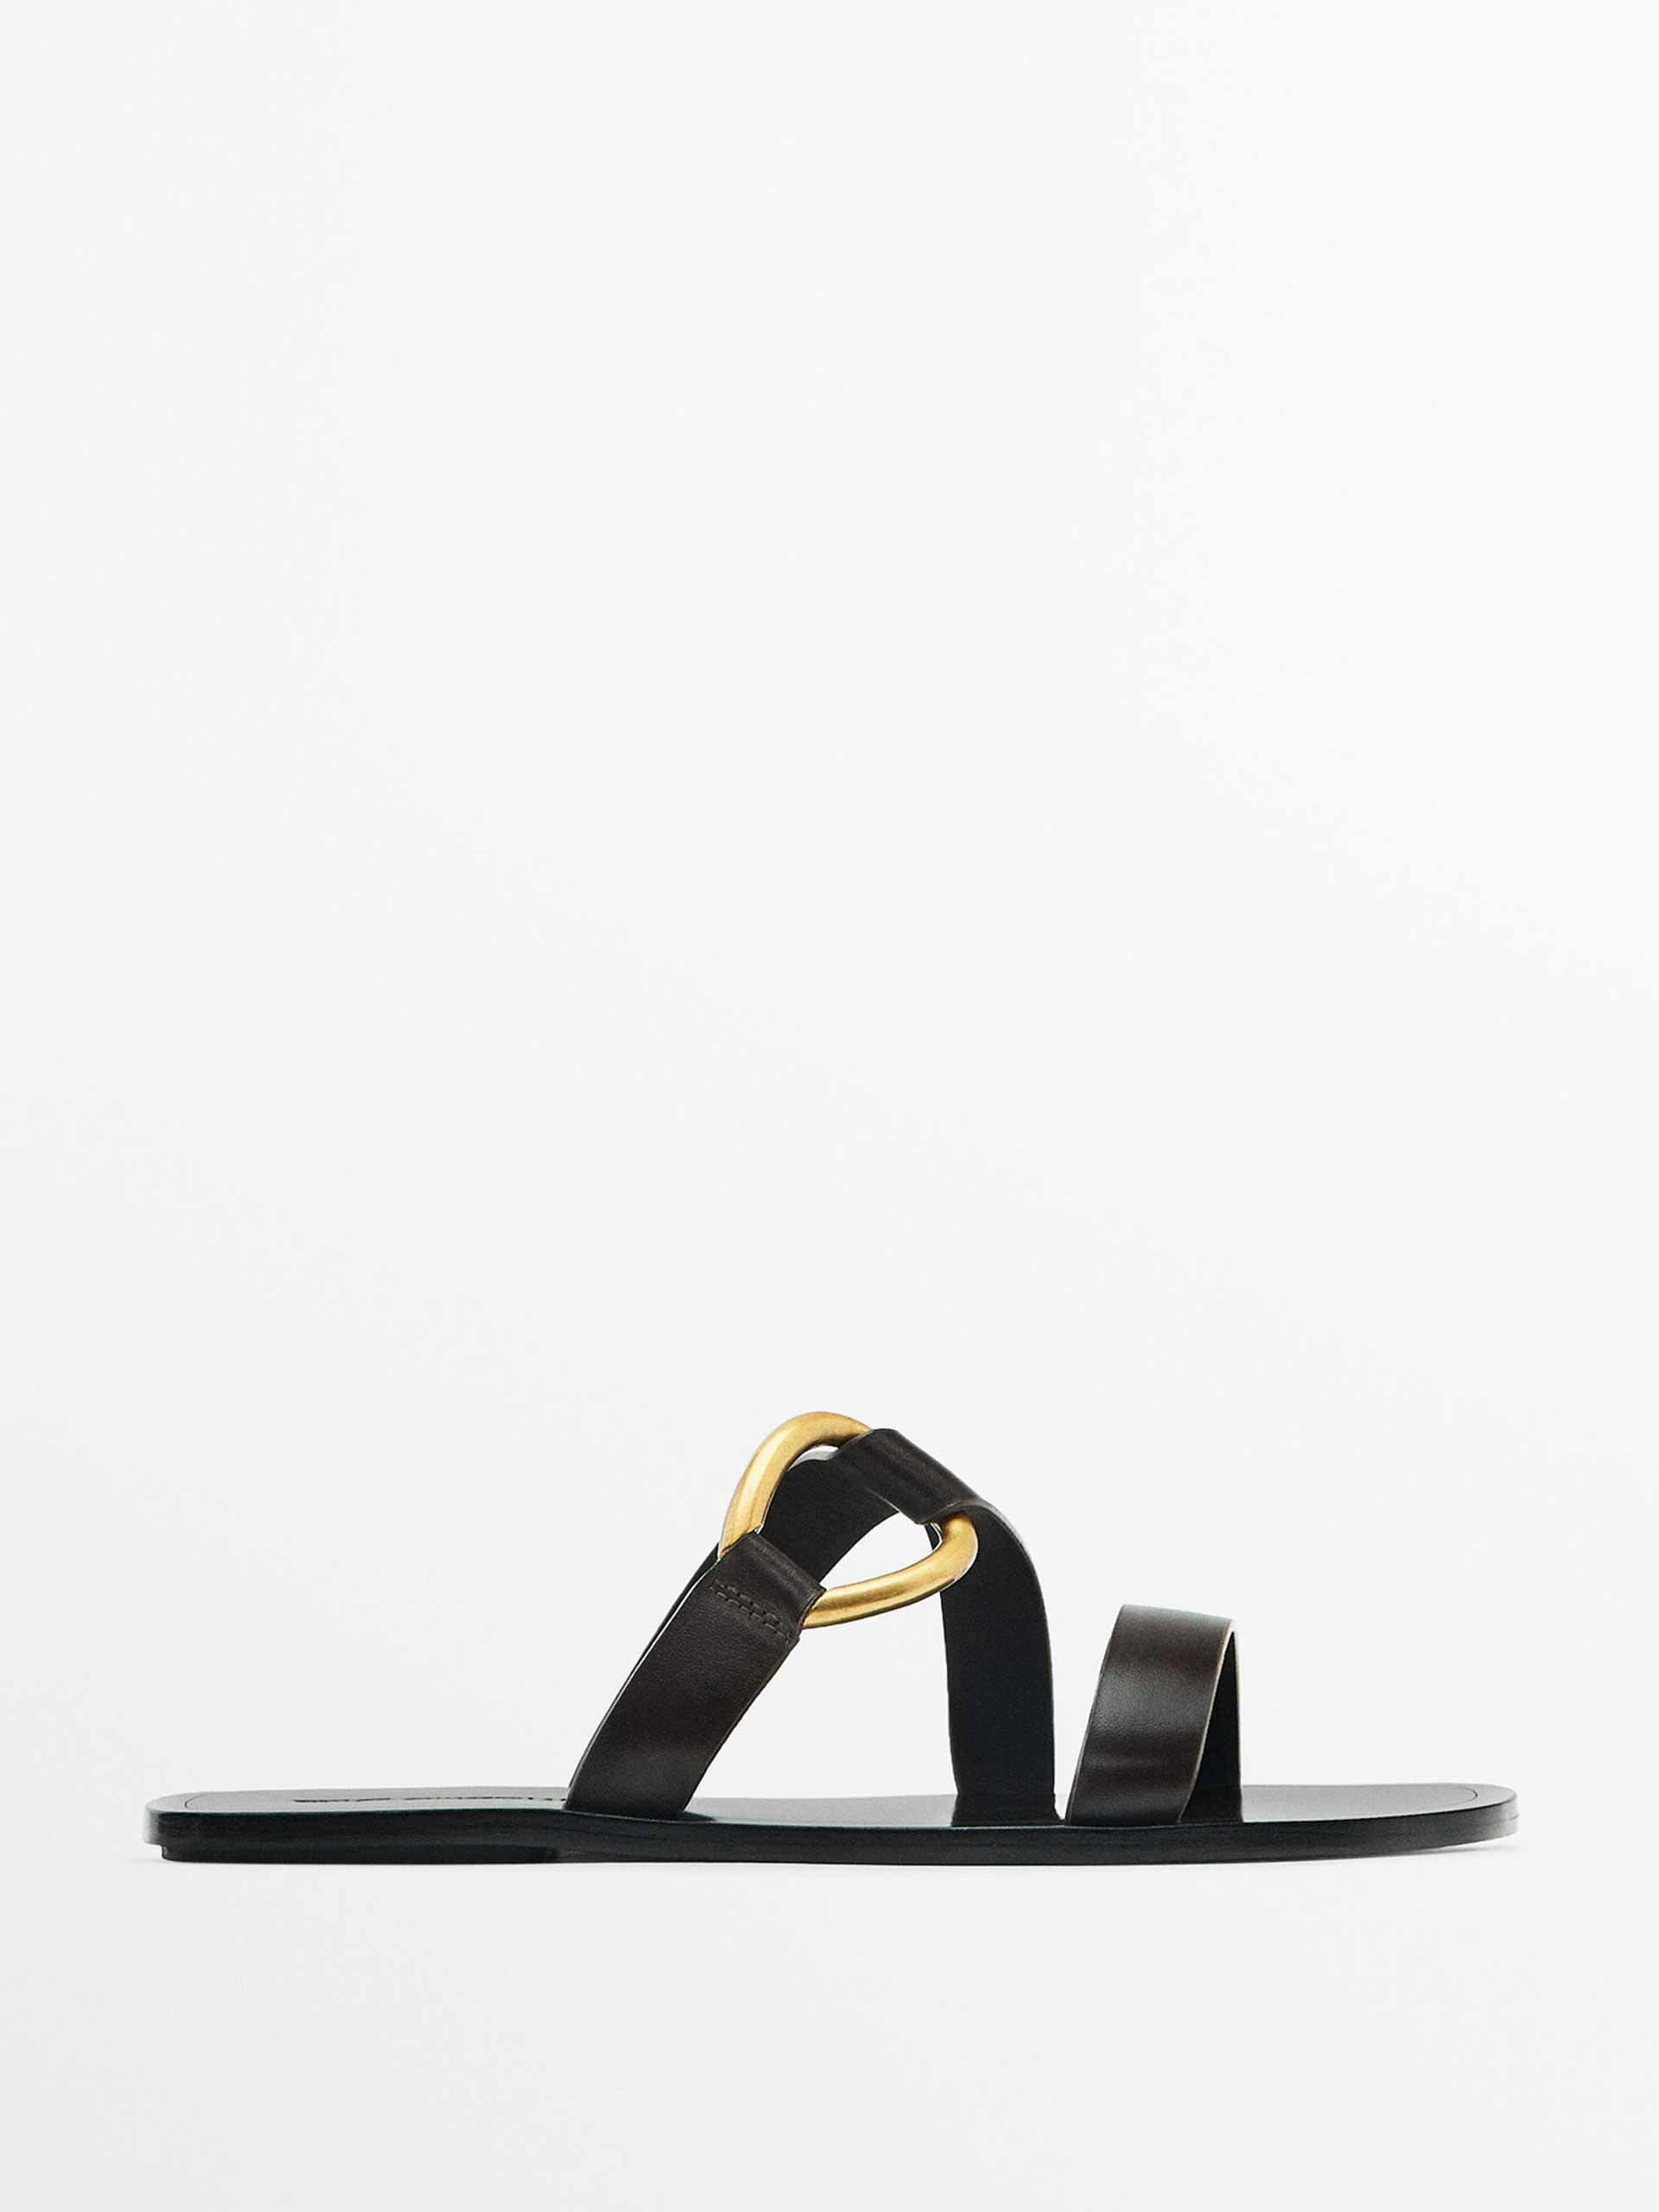 Black flat slider sandals with metal ring detail